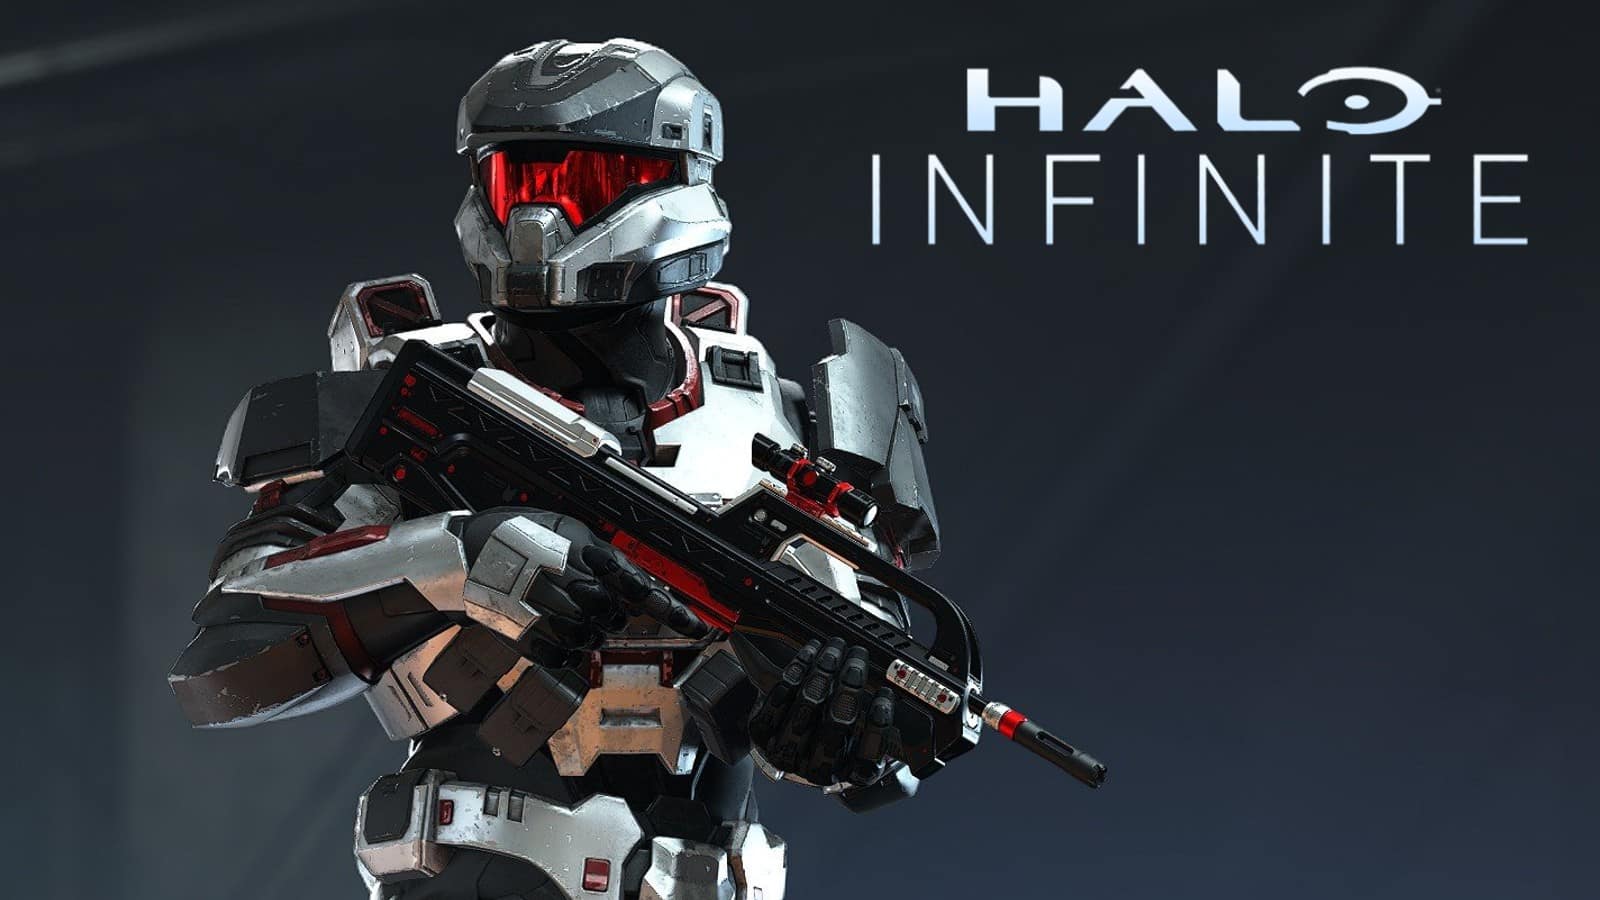 Halo Infinite Ranked explained